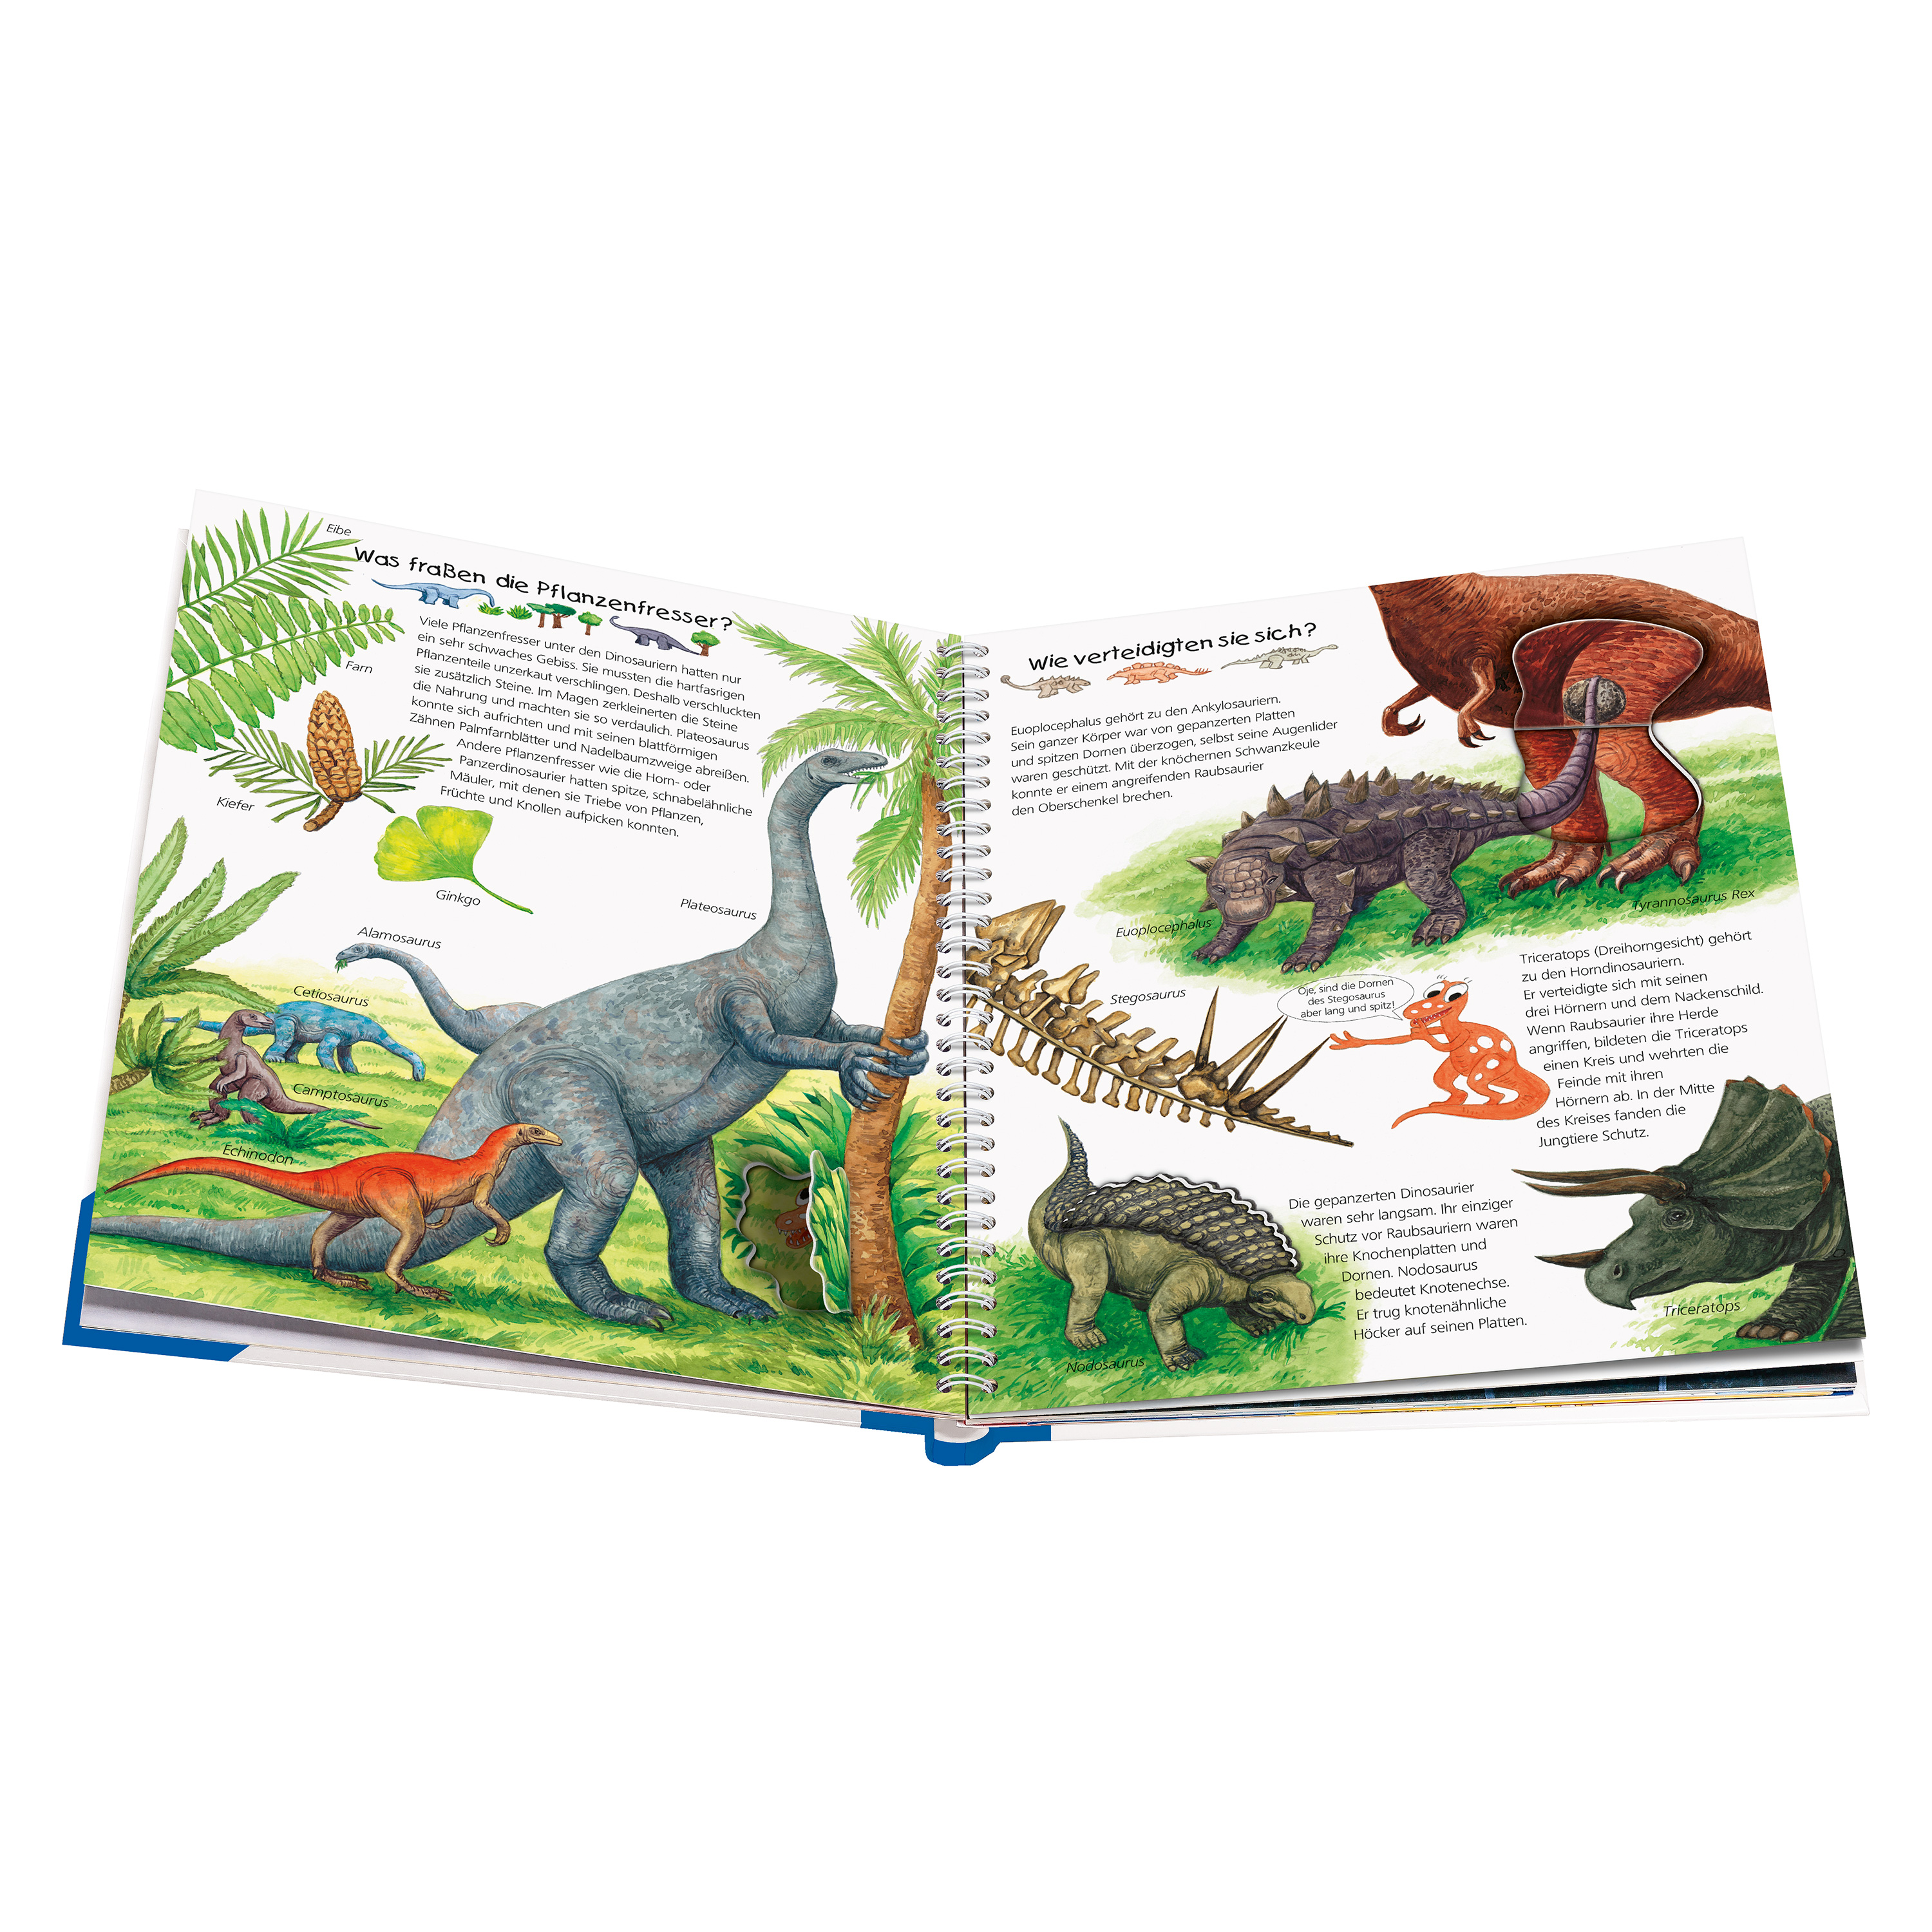 WWW 'Alles über Dinosaurier' (Bd. 12)